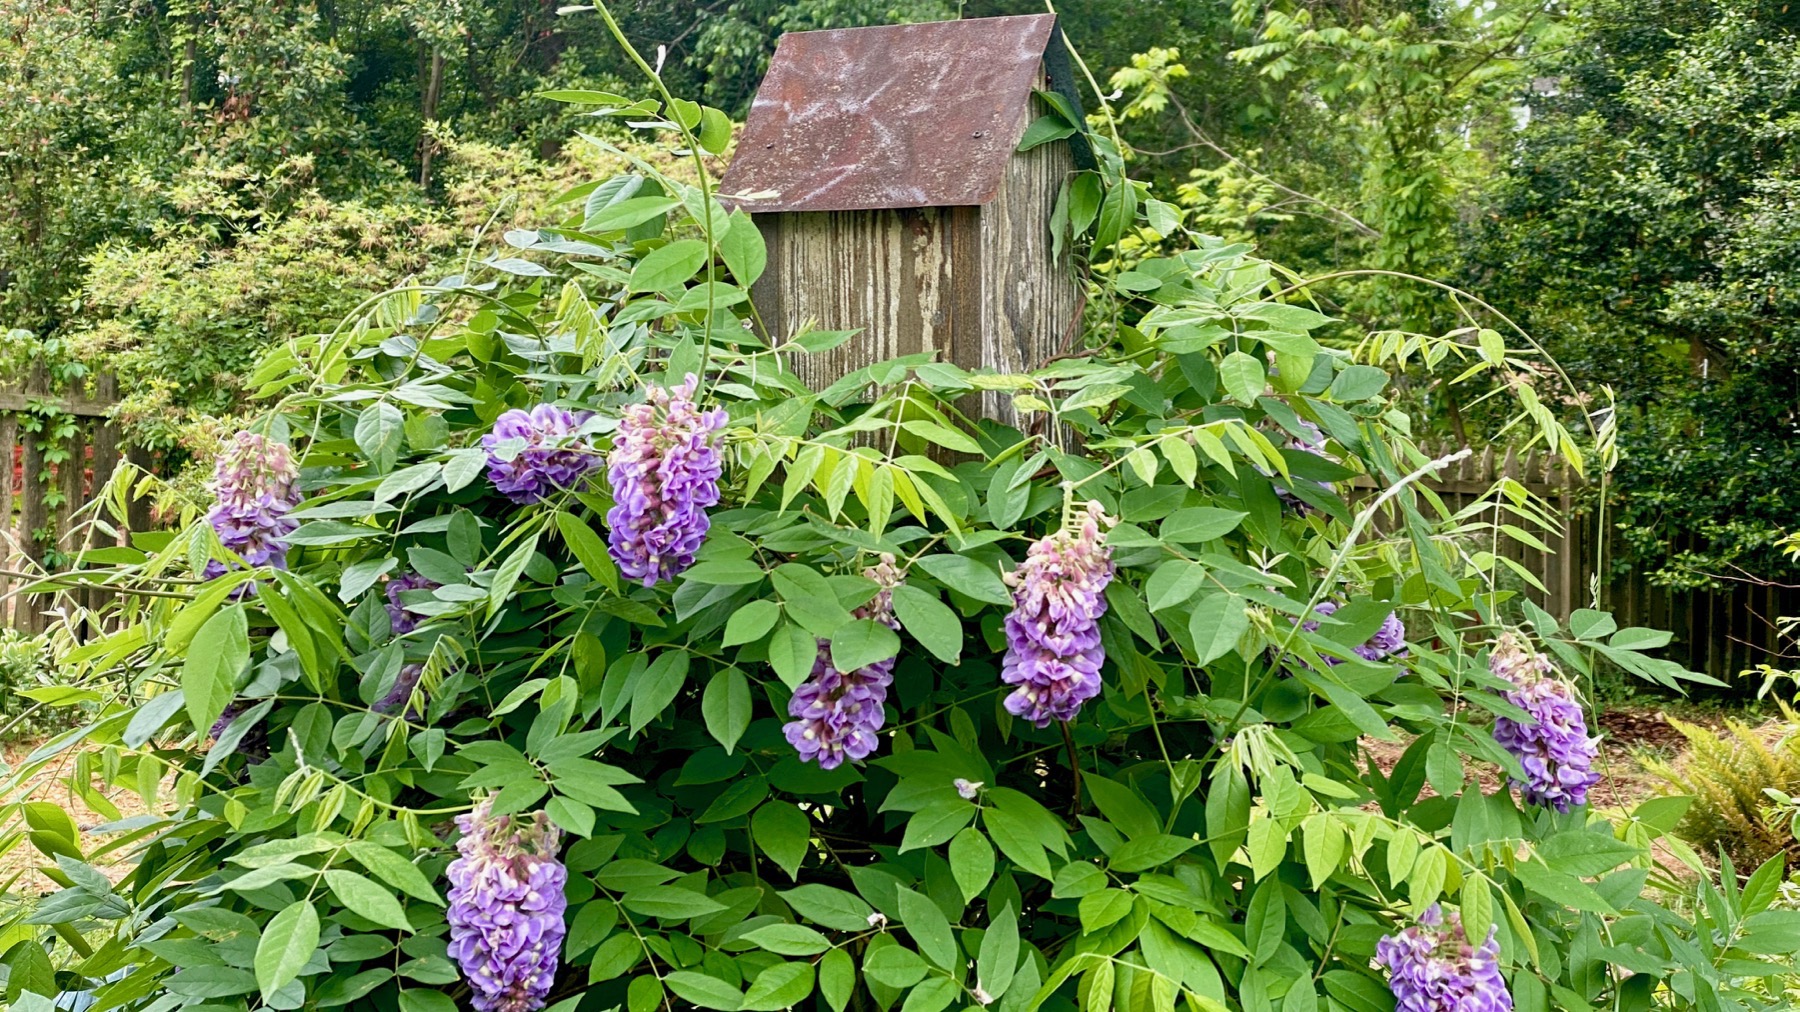 Birdhouse wisteria